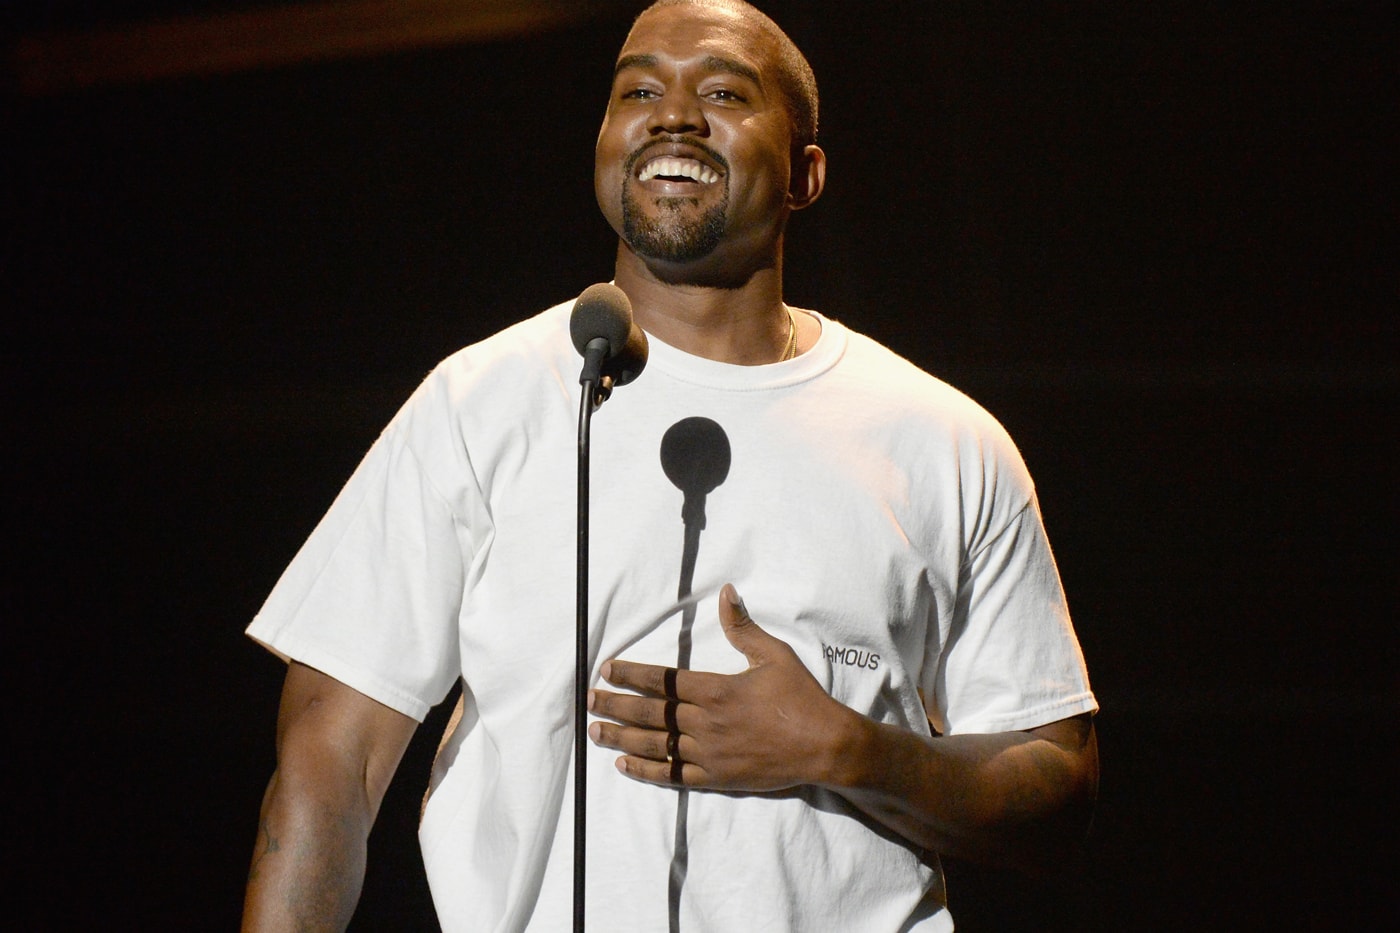 Kanye West Retracts Greatest Album Claim